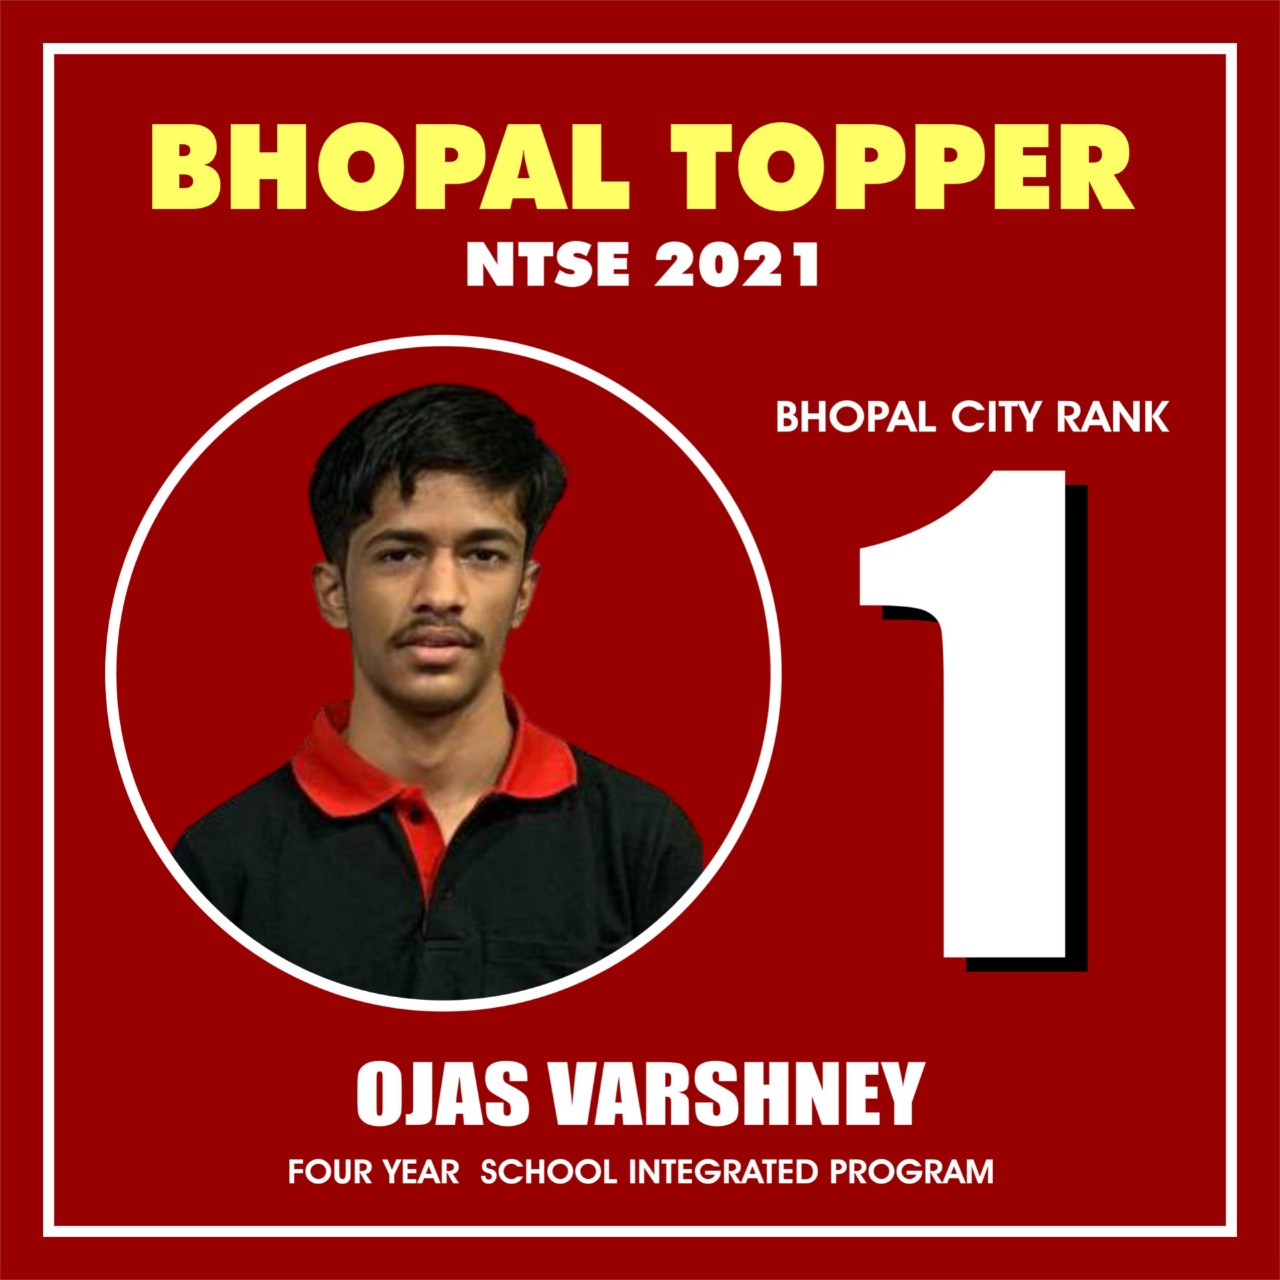 Ojas Varshney NTSE Bhopal Topper